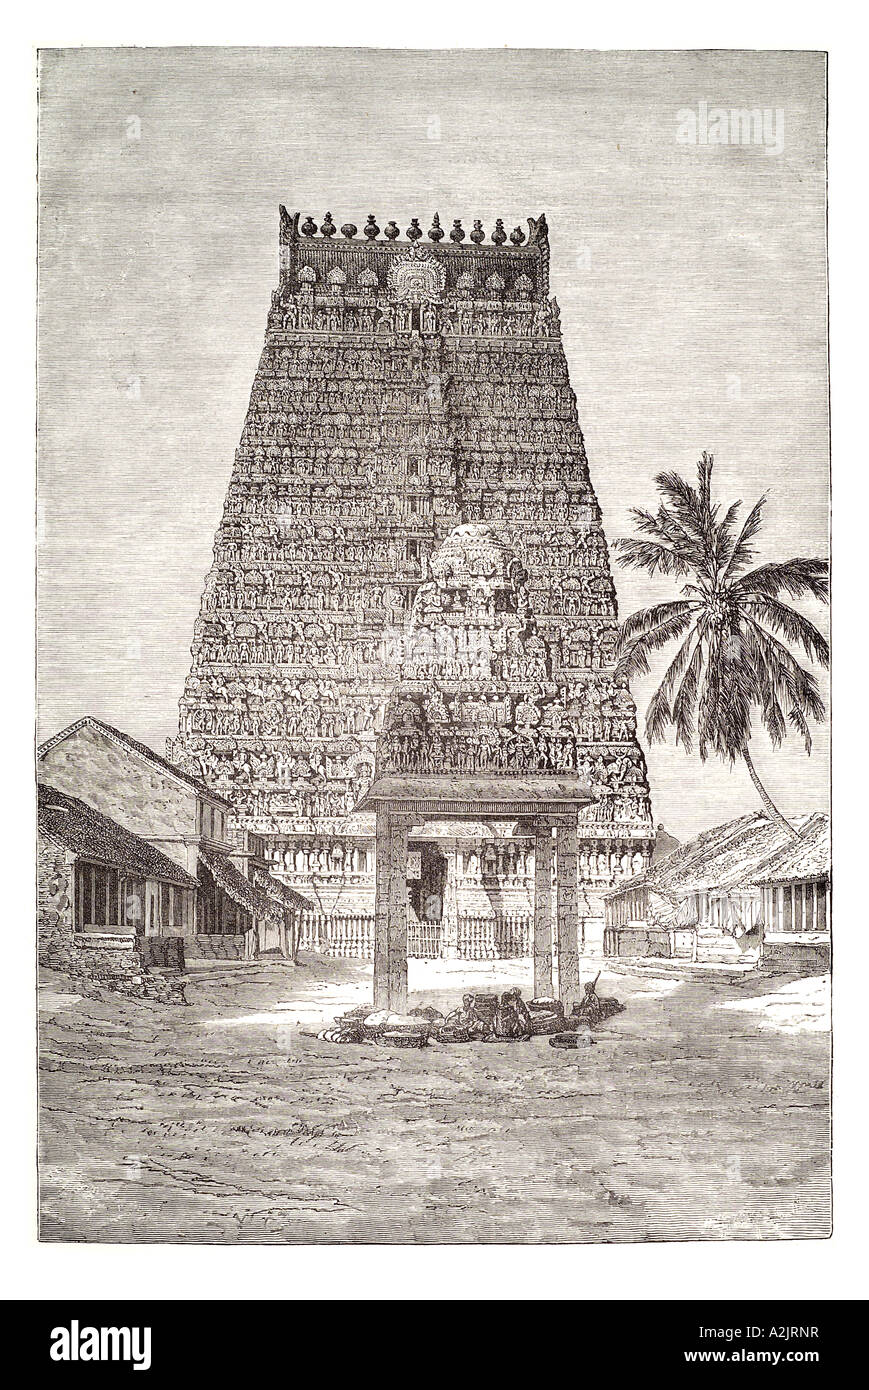 La tour du temple Kumbakonam Kumbeswaran Asie du Sud Inde du sud Tamil Nadu sarangapani ornate hindu religion siva en pierre Banque D'Images